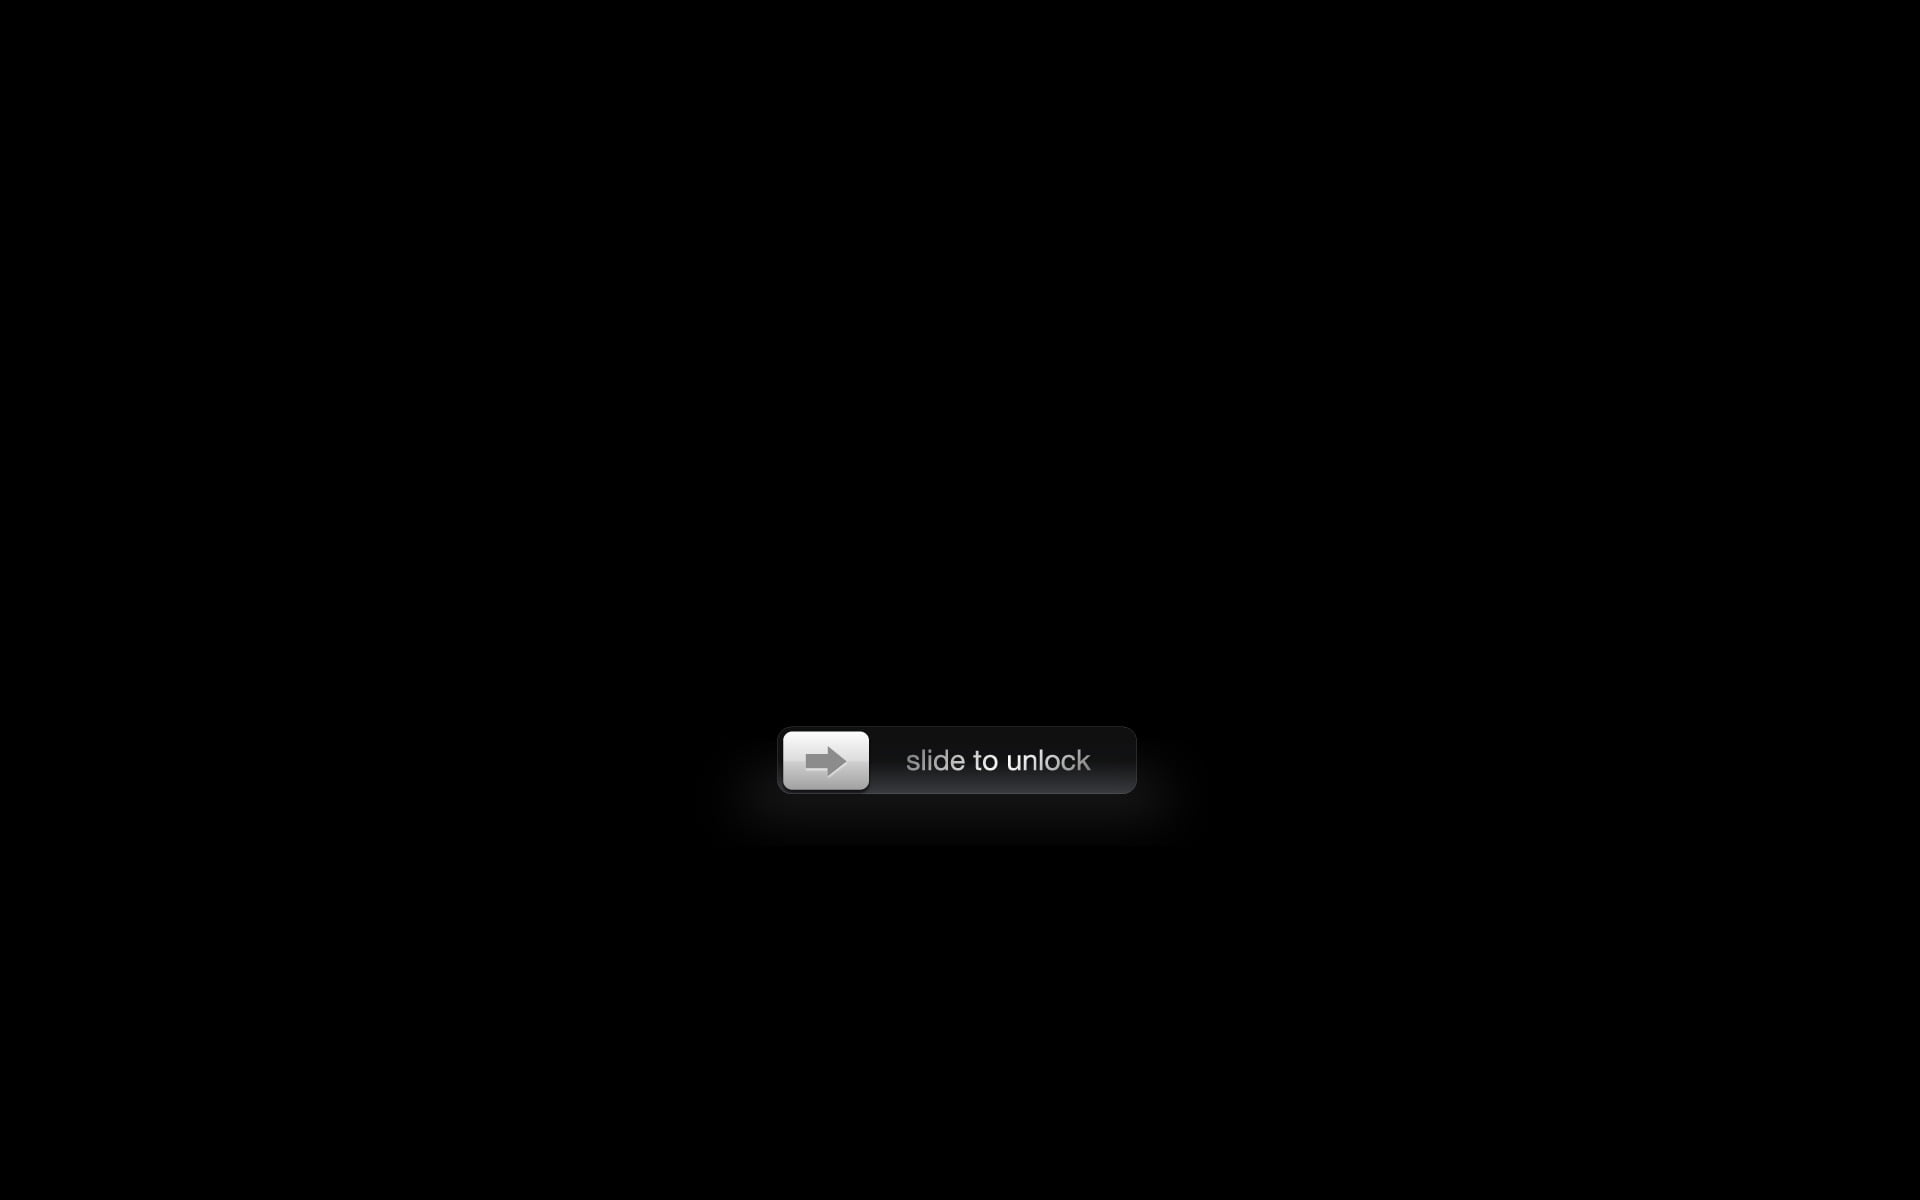 iPhone lock icon, background, black, minimalism, slide to unlock